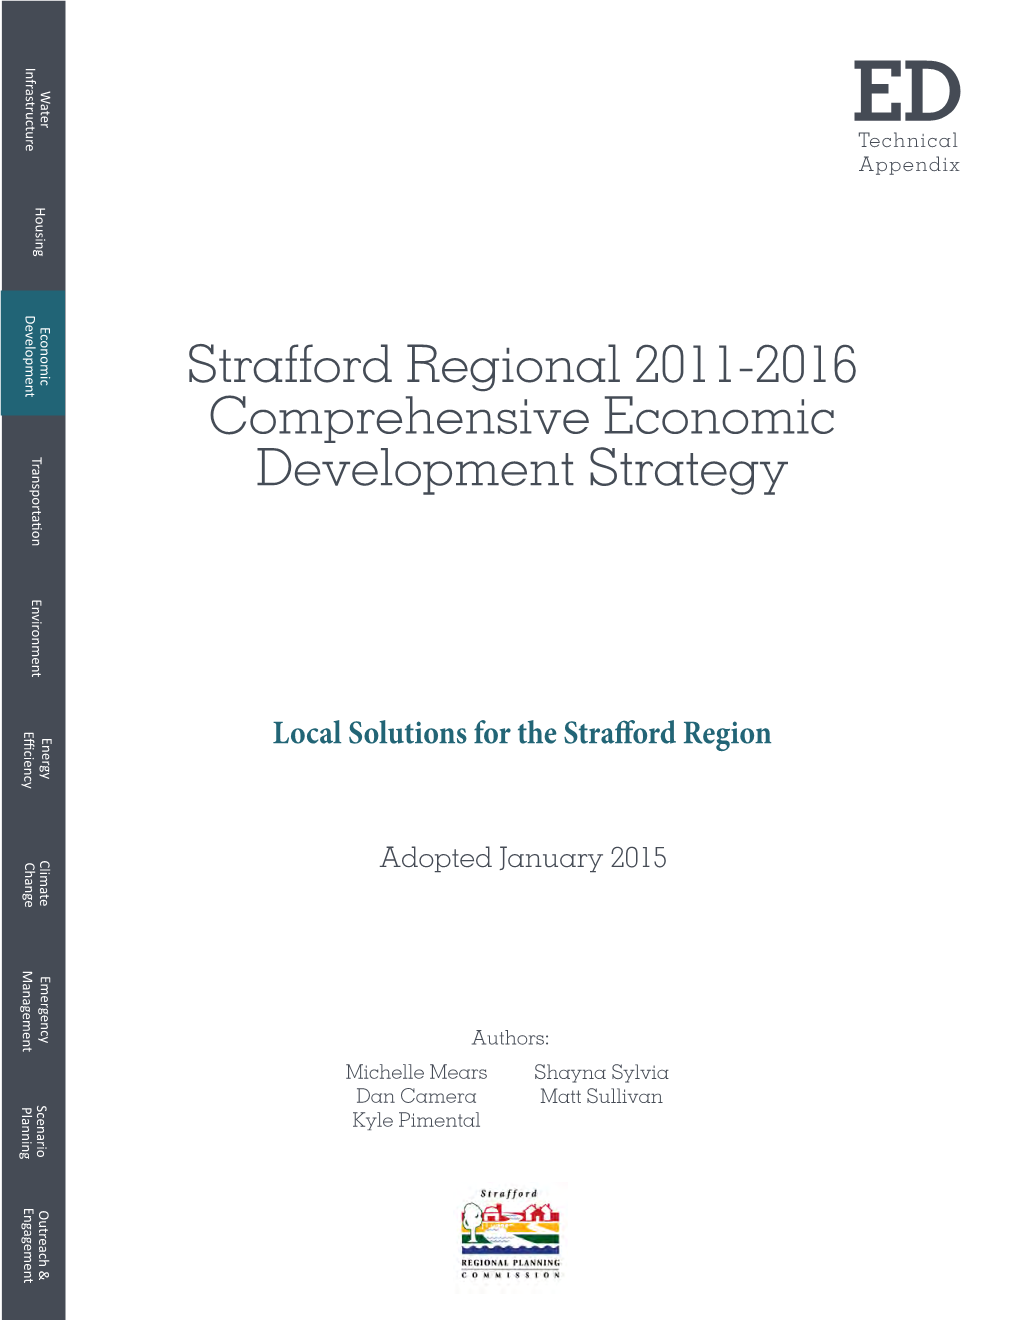 Strafford Regional 2011-2016 Comprehensive Economic Development Strategy